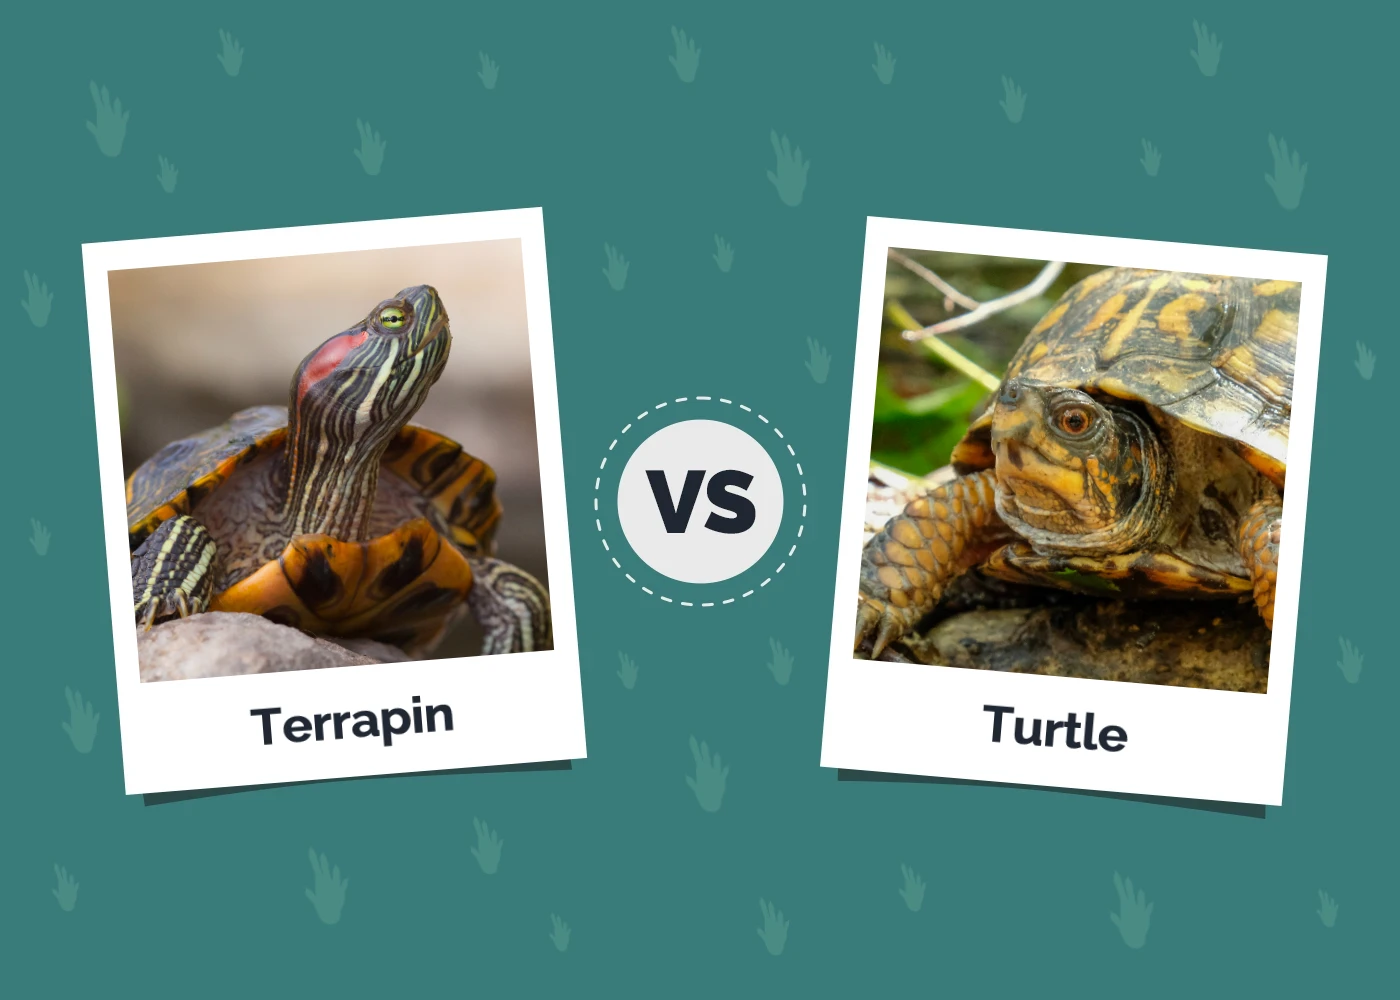 Terrapin vs Turtle - Featured Image